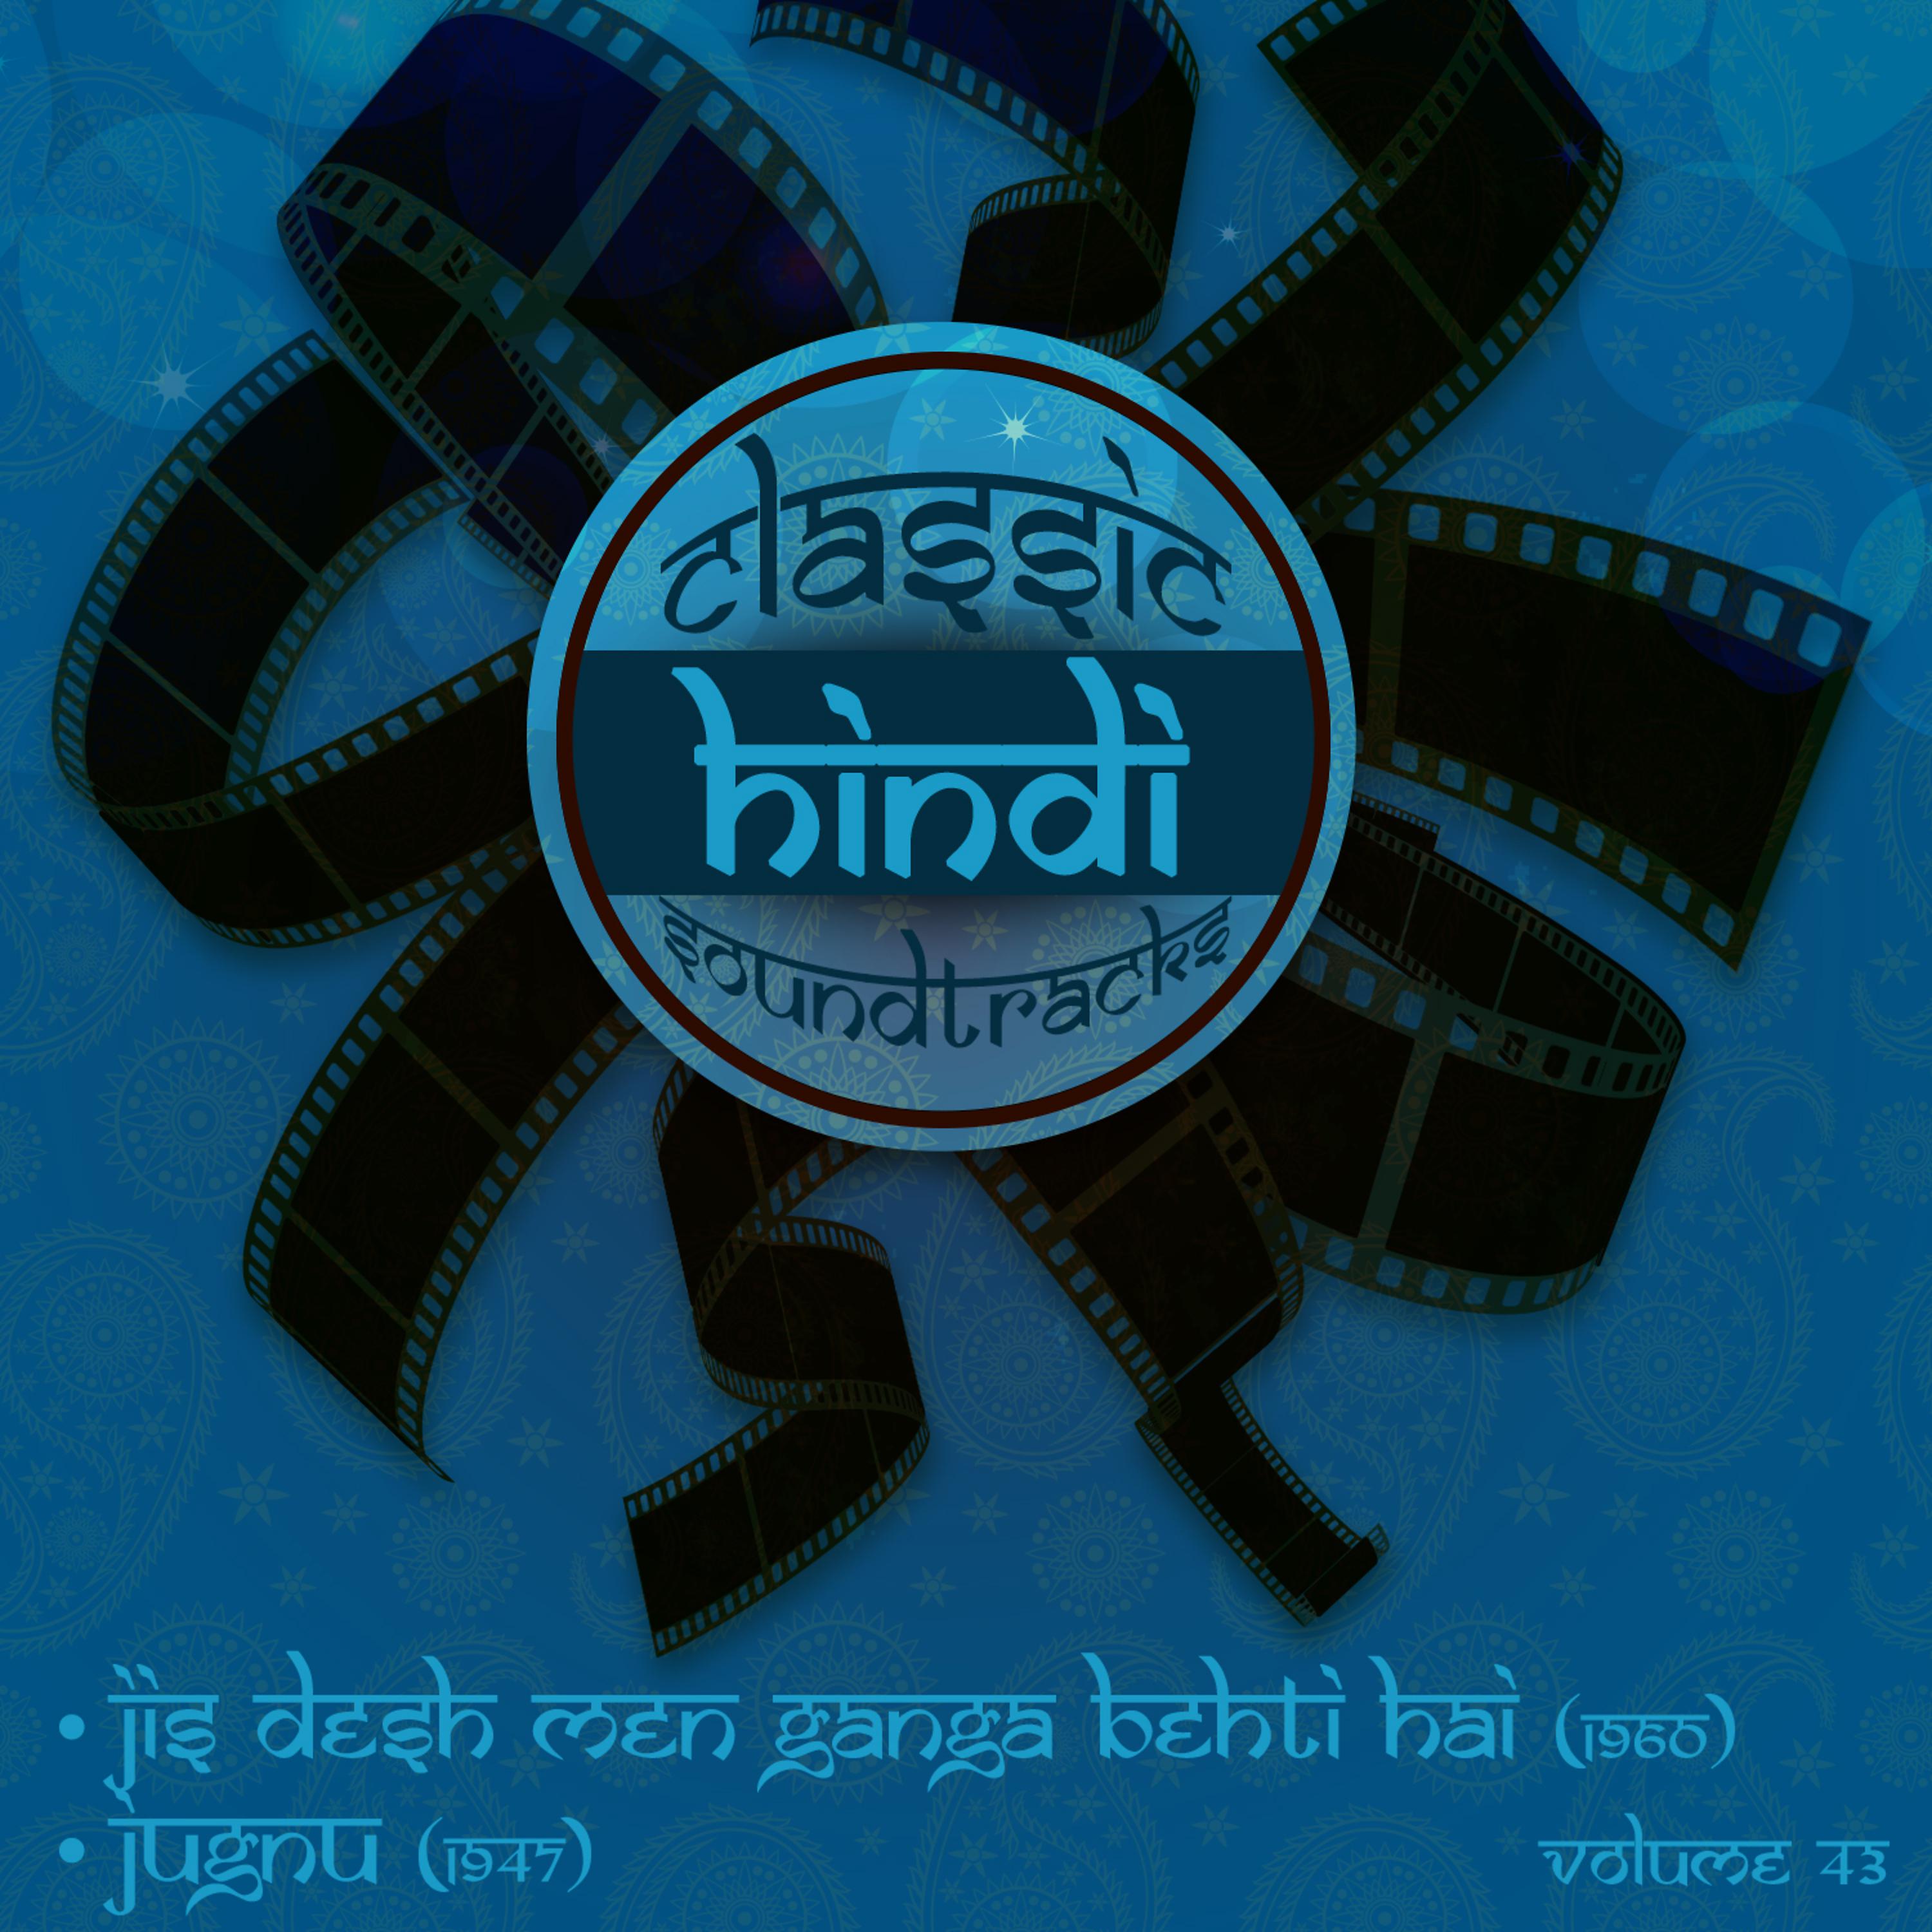 Постер альбома Classic Hindi Soundtracks, Jis Desh Men Ganga Behti Hai (1960), Jugnu (1947), Volume 43